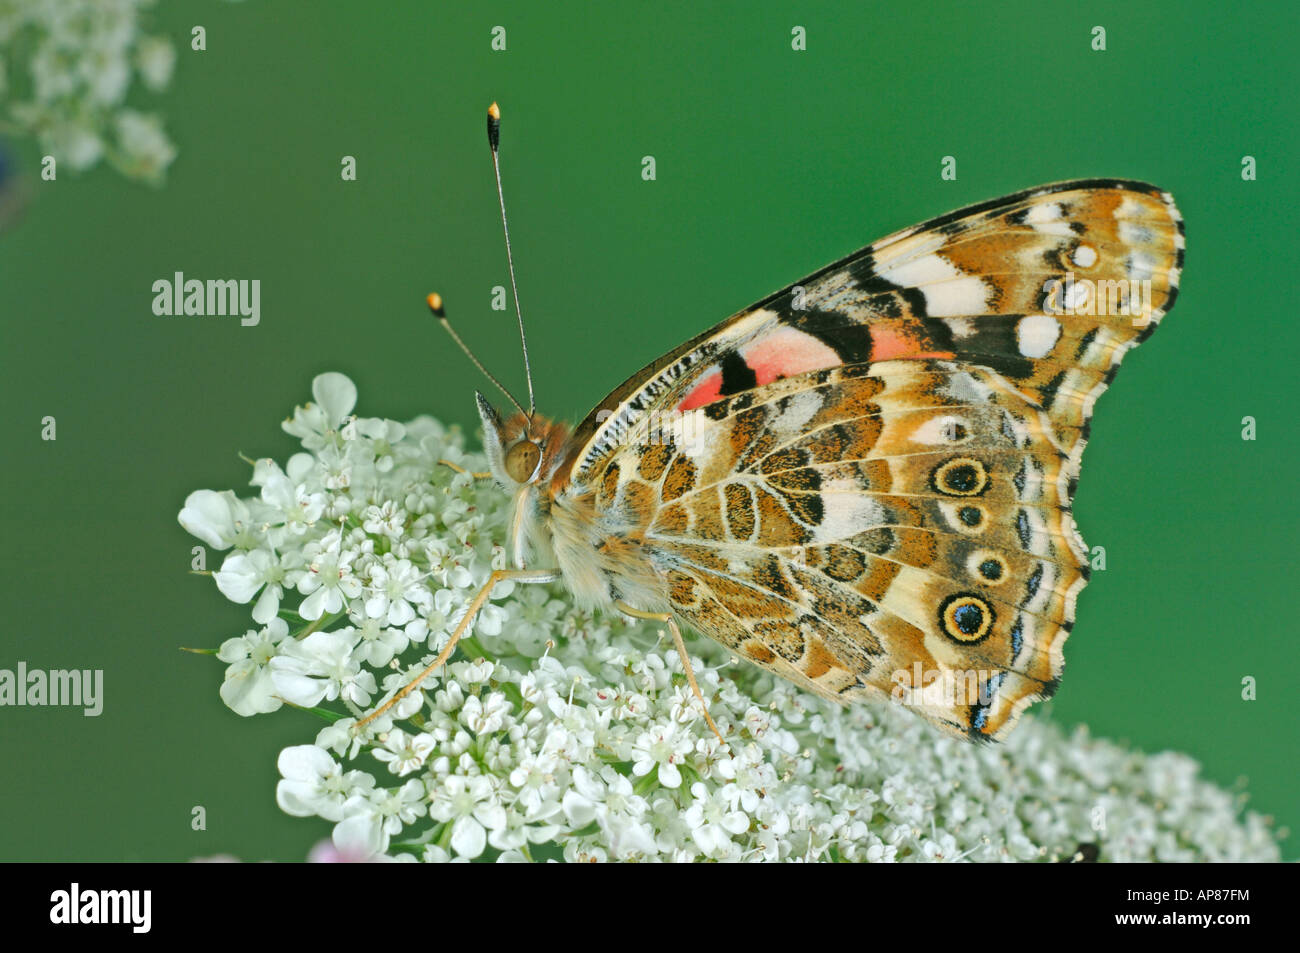 Distelfalter, Distel Schmetterling (Vanessa Cardui, Cynthia Cardui) auf Blume Stockfoto